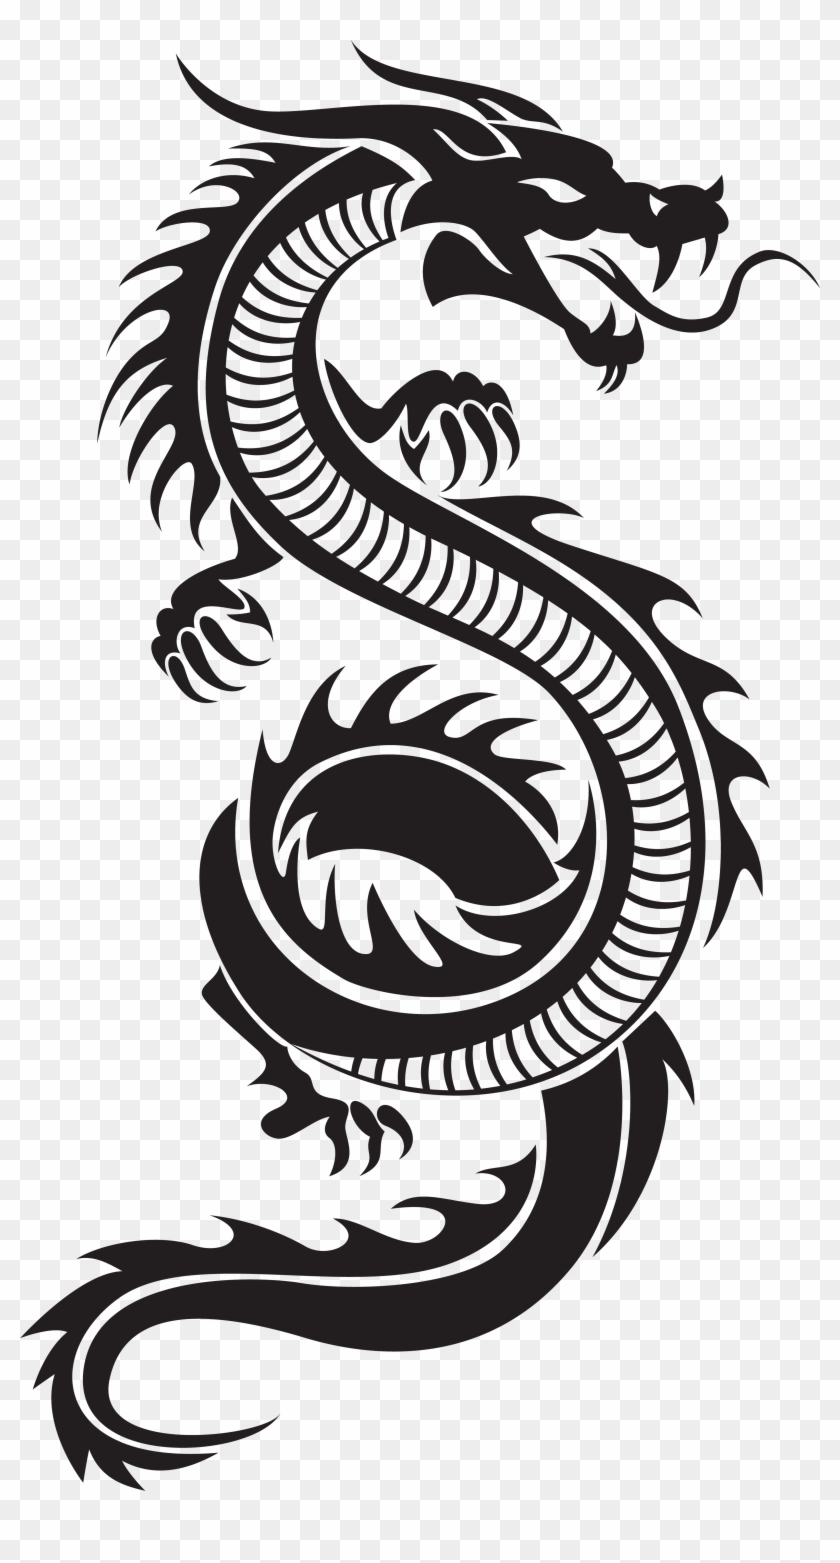 Dragon Silhouette Clip Art Chinese Dragon Silhouette - Dragon Silhouette #528474